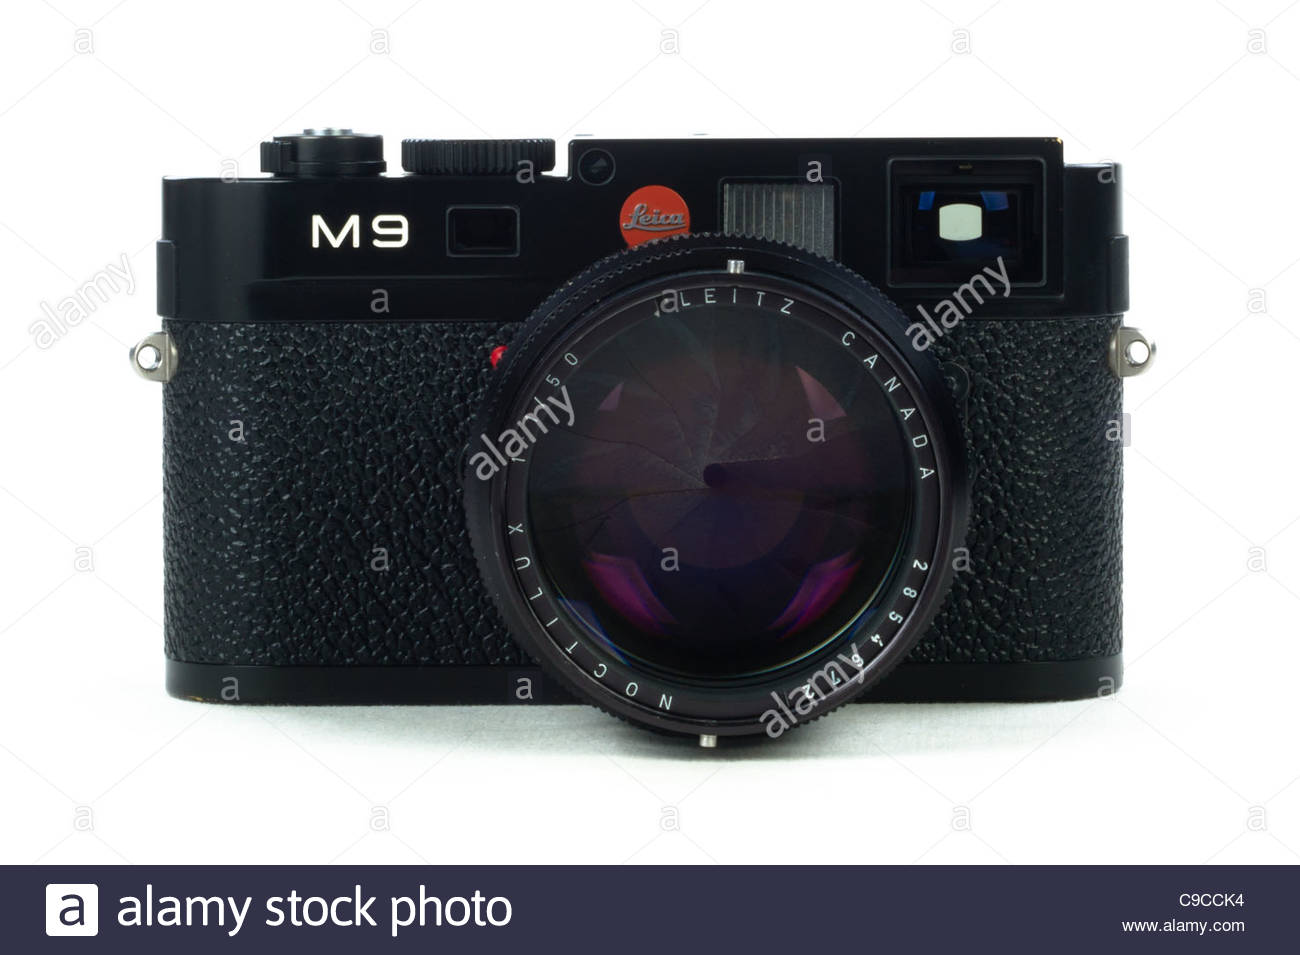 Leica M9 Digital Rangefinder Camera With Legendary Noctilux F1